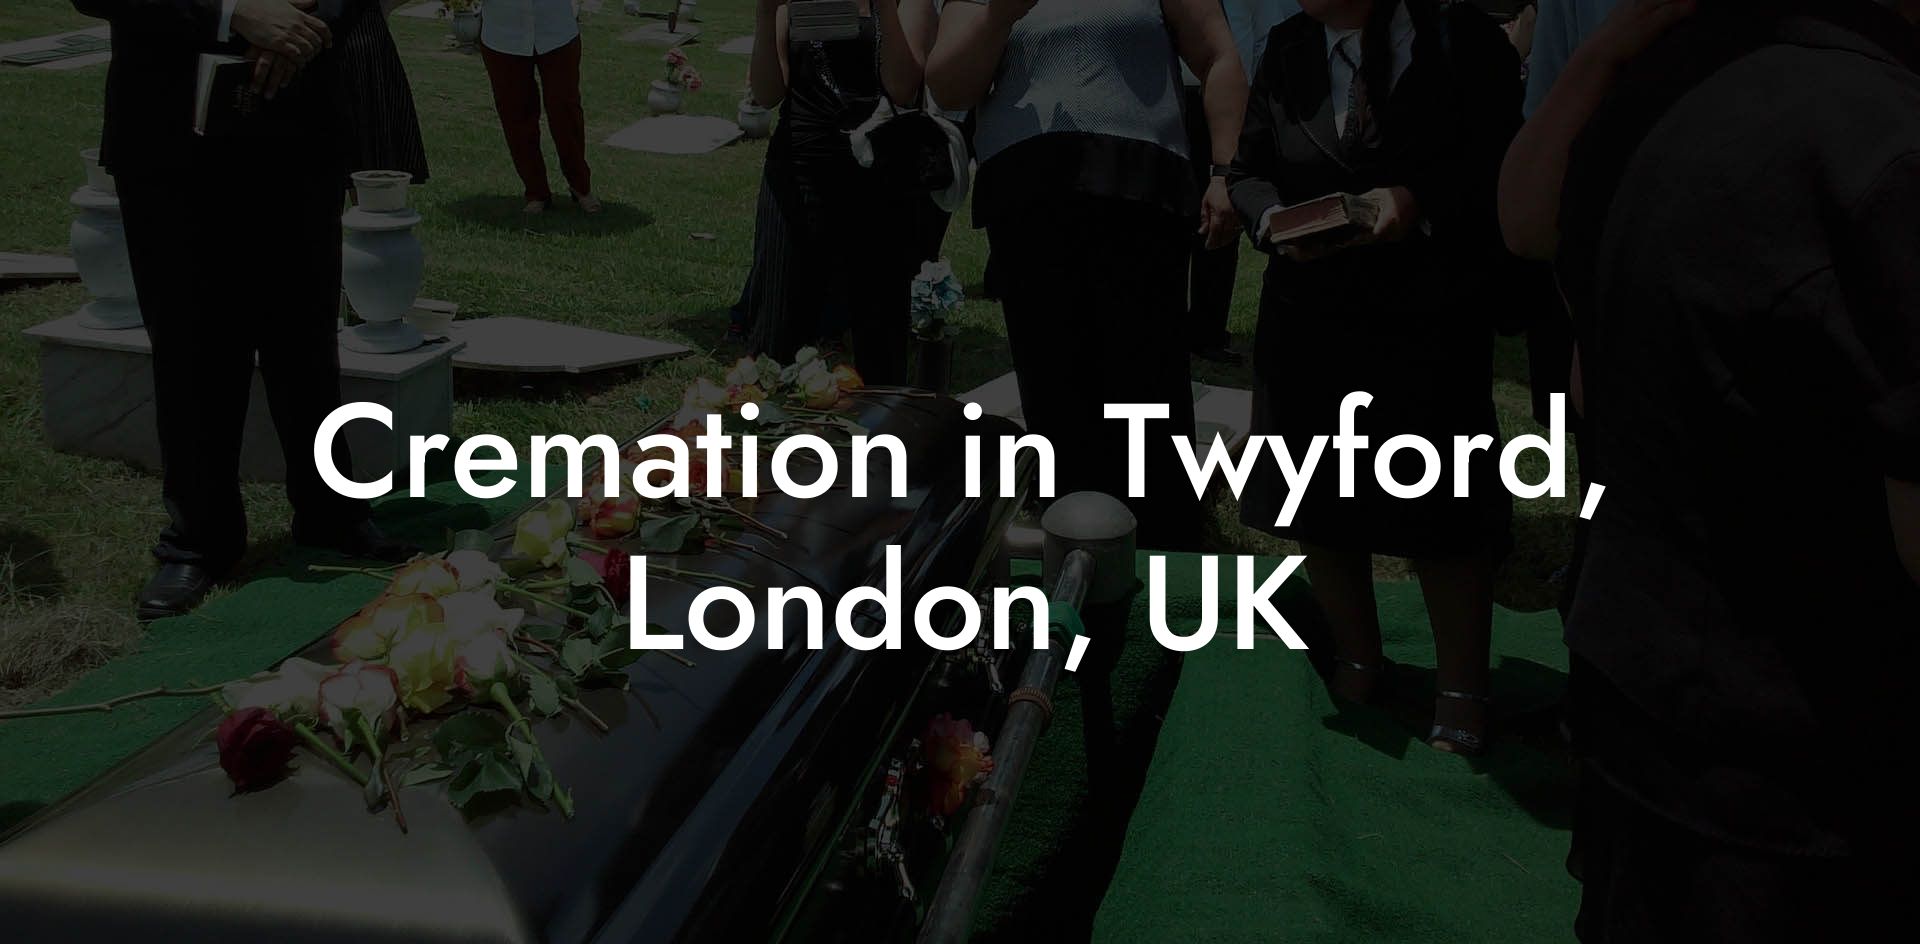 Cremation in Twyford, London, UK